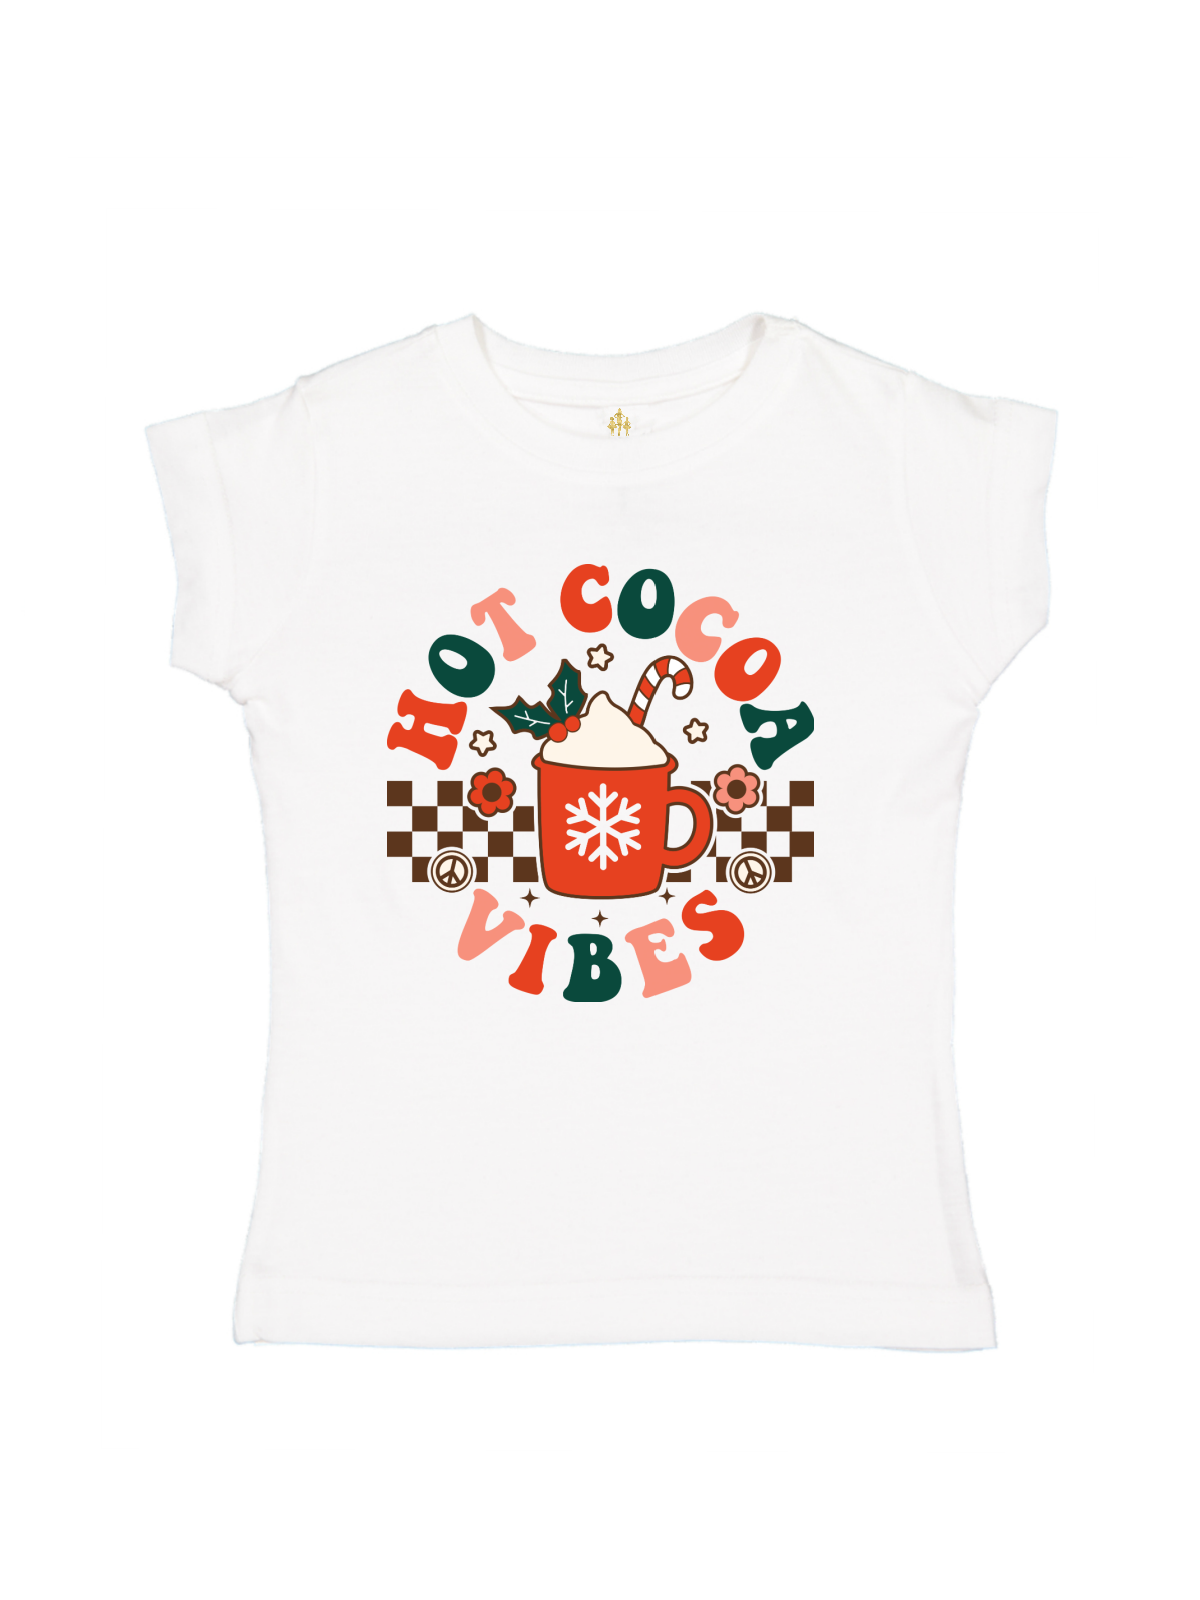 Hot Cocoa Vibes Girls Christmas Shirt